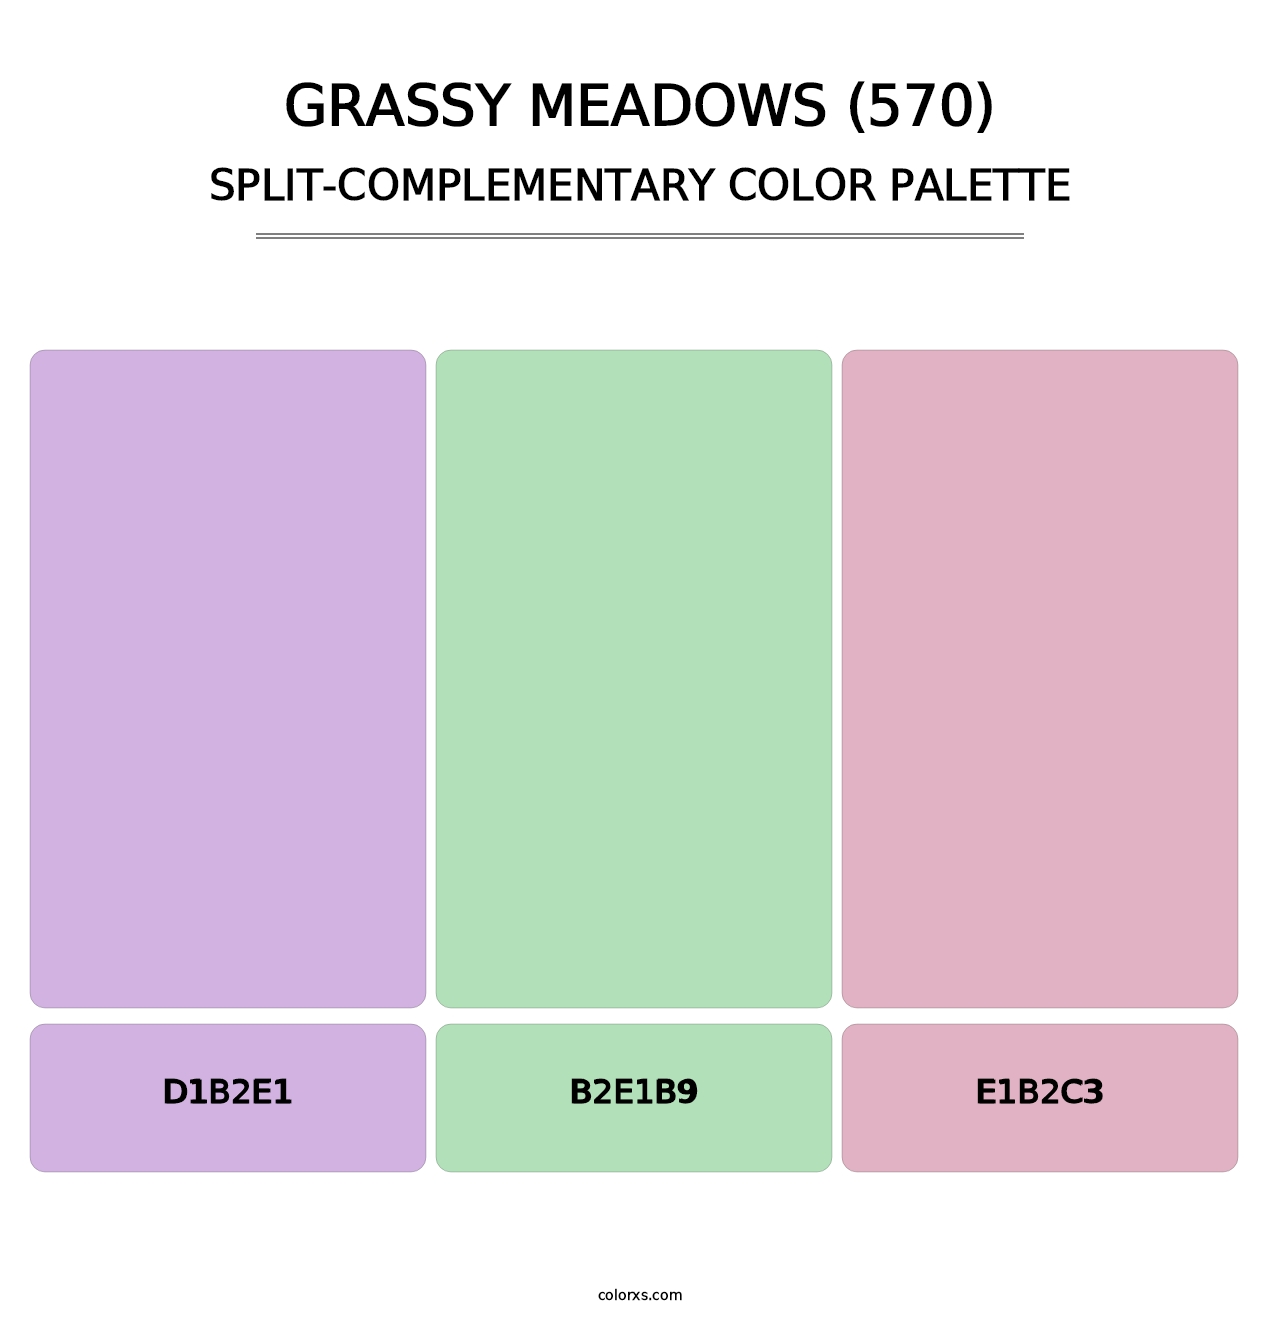 Grassy Meadows (570) - Split-Complementary Color Palette